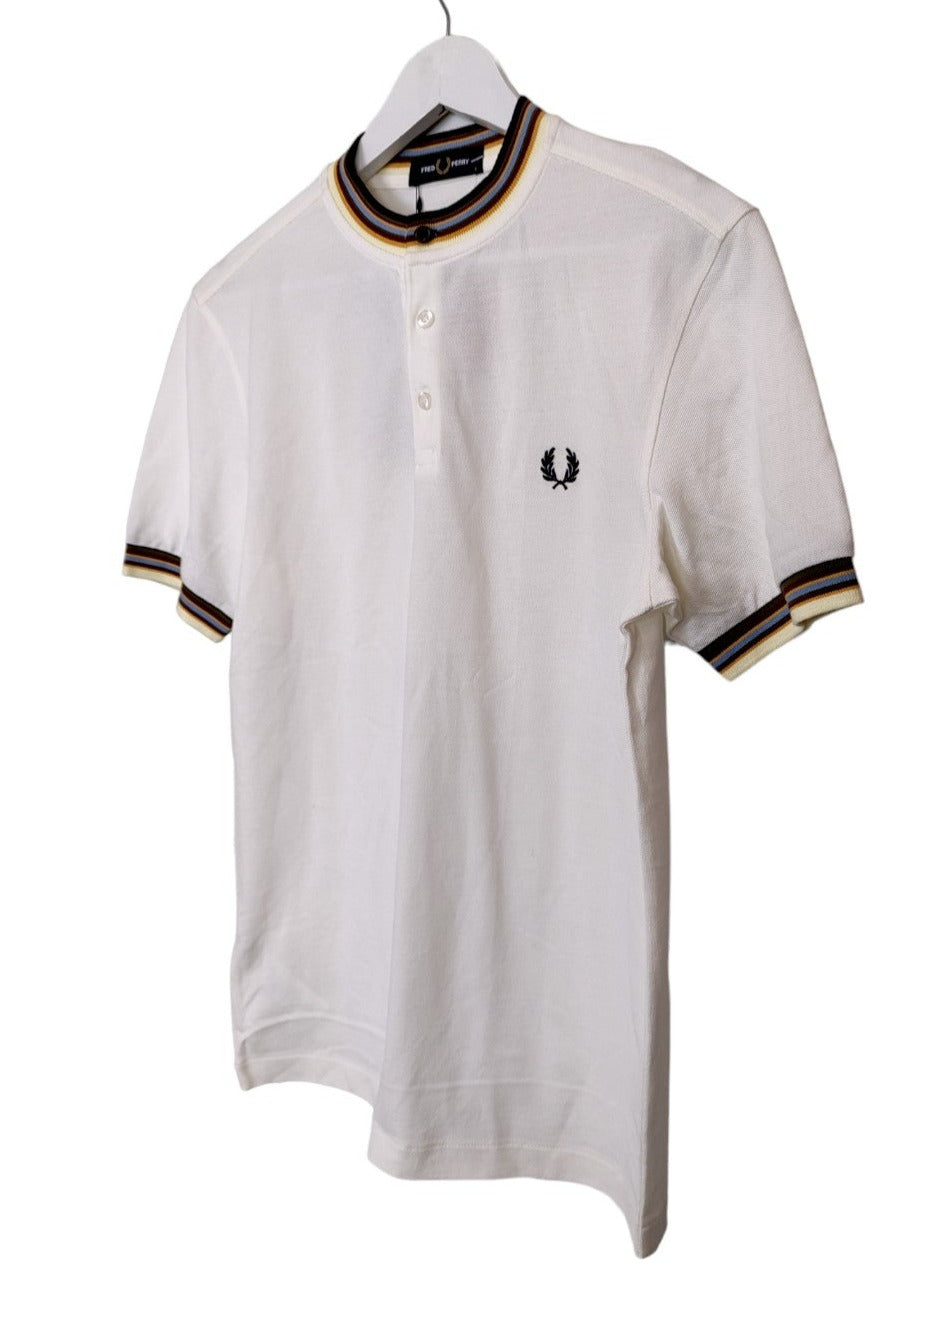 Stock, Ανδρική Μπλούζα - T-Shirt FRED PERRY σε Λευκό χρώμα  (Small)